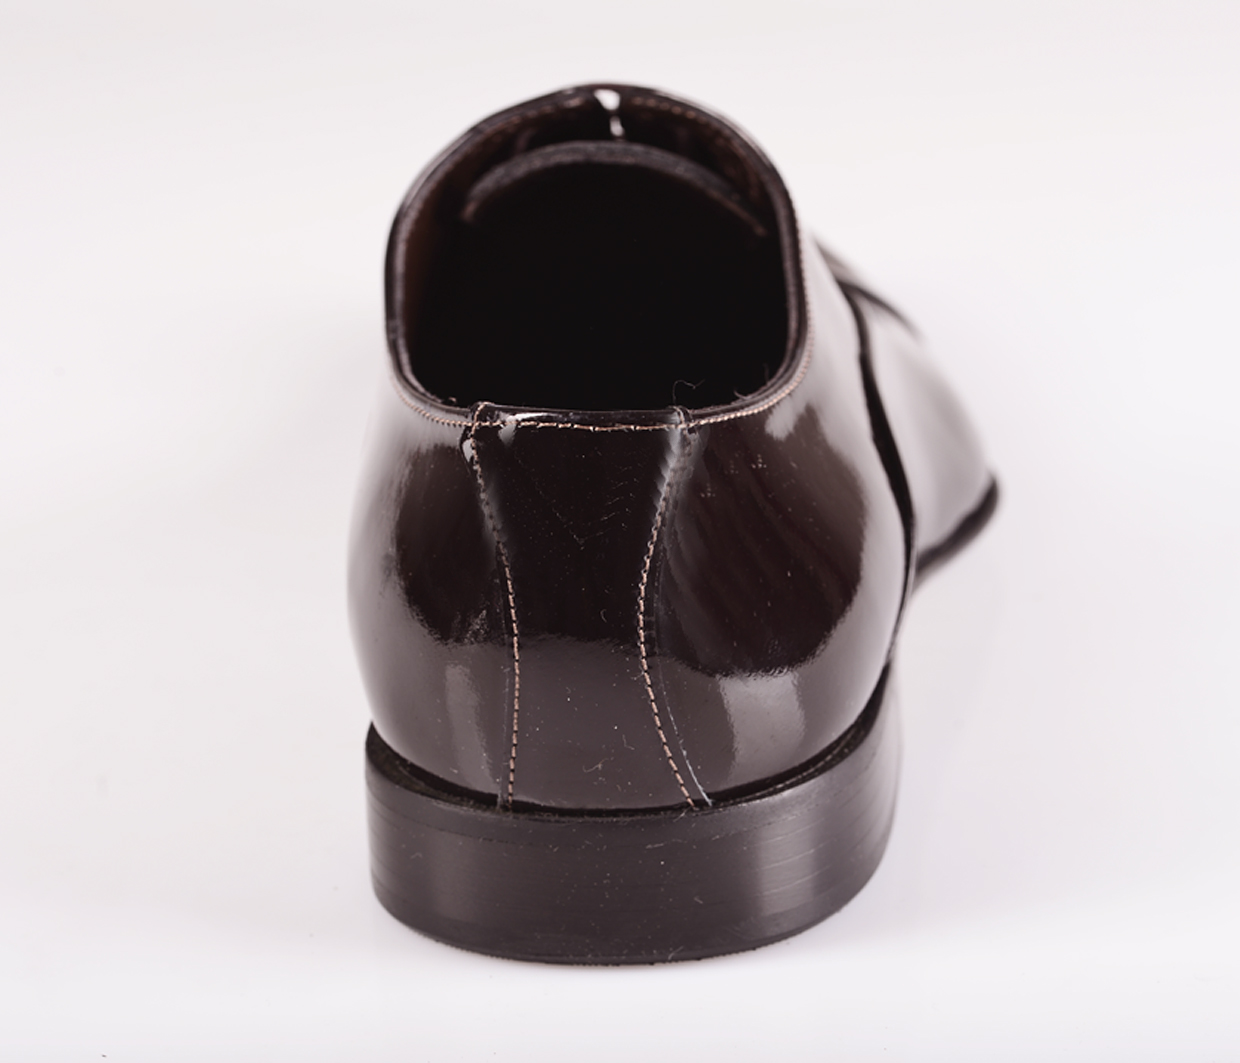 Stilvoller Lackschuh in Dunkel Braun, aus echtem Leder, handgemacht